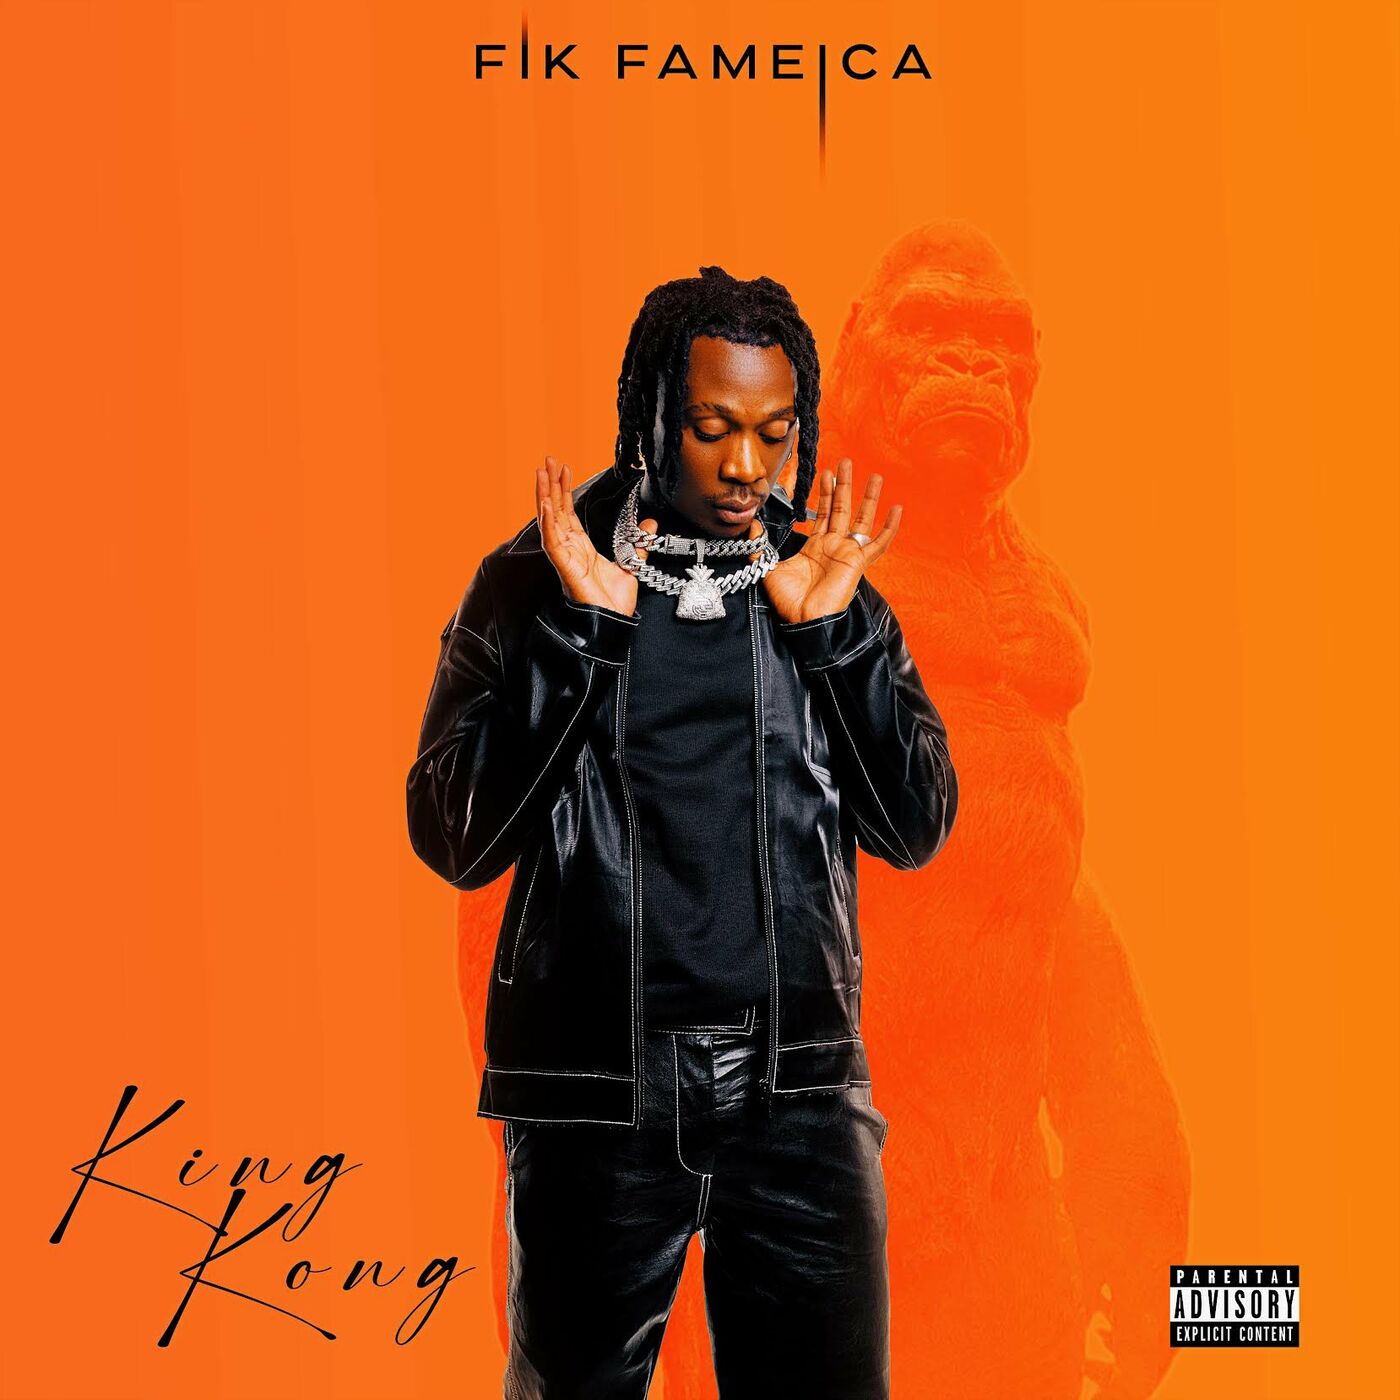 fik-fameica-who-jah-bless-album-cover